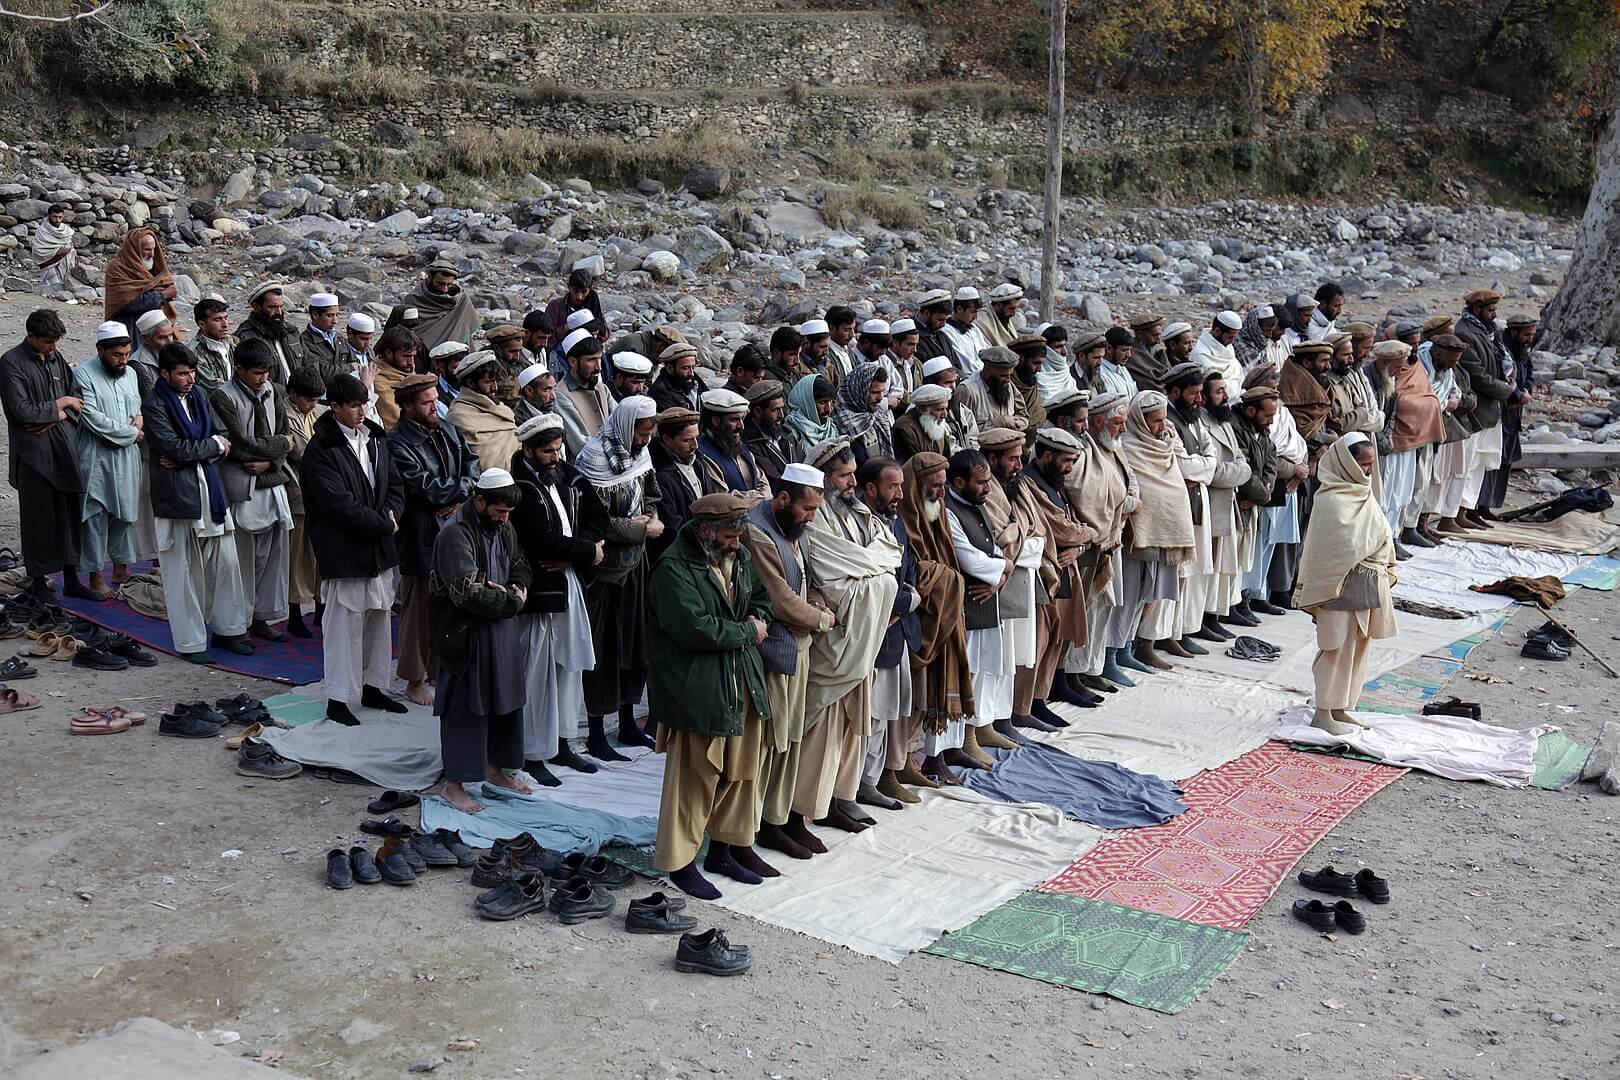 1620px-Afghan_men_praying_in_Kunar-2009.jpg